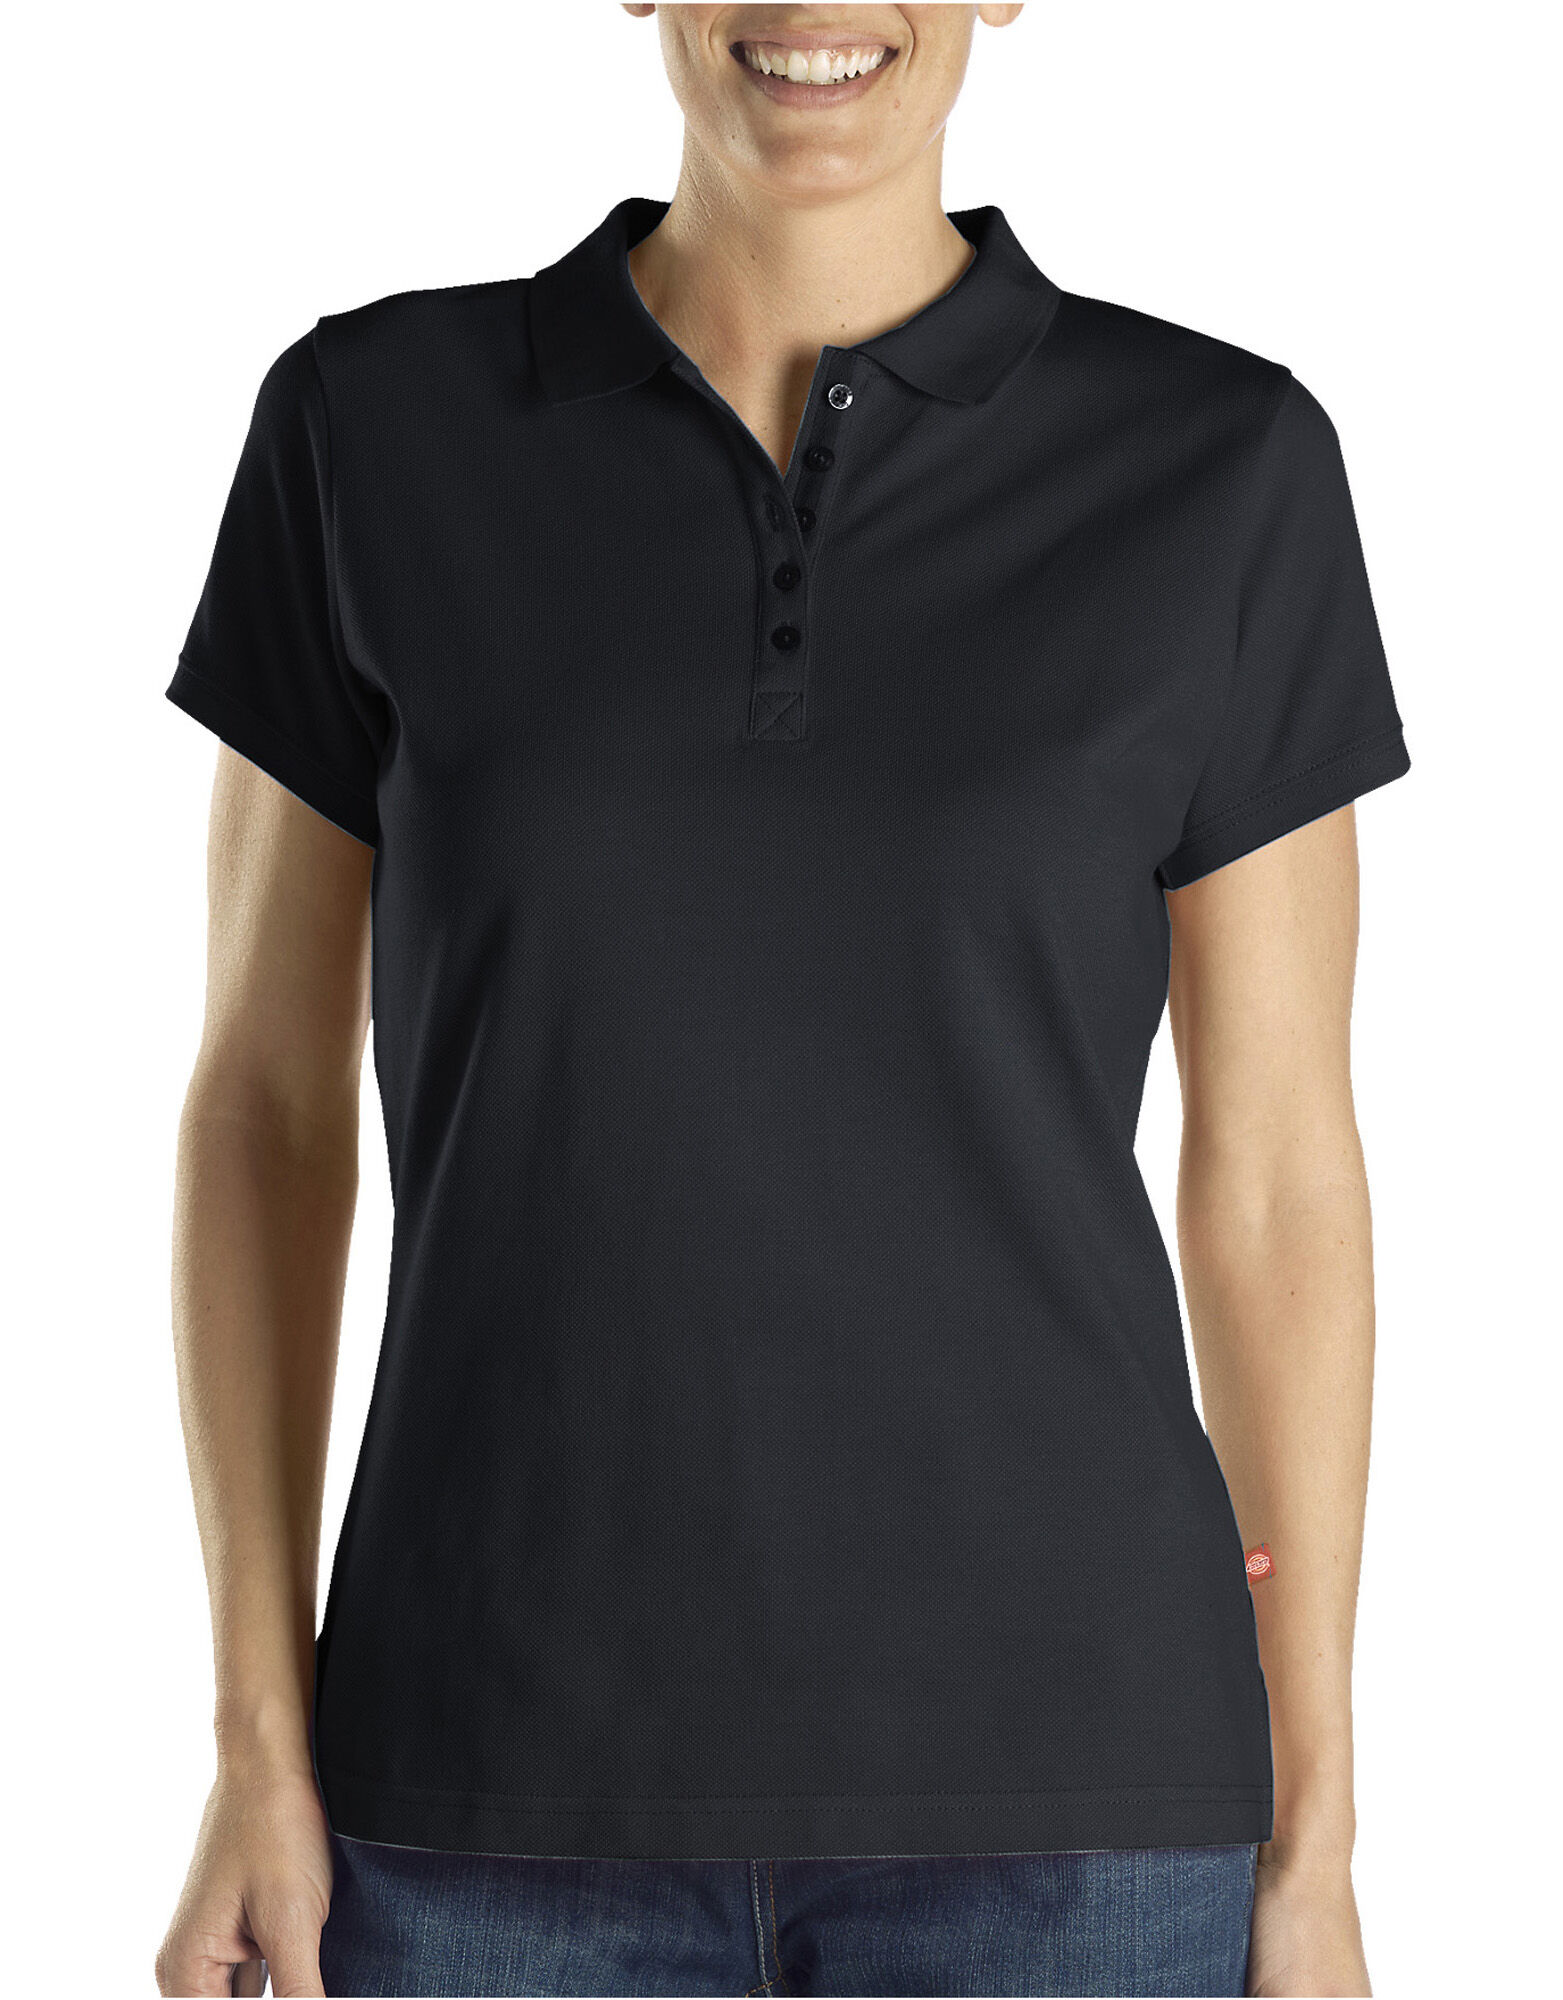 female black polo shirt